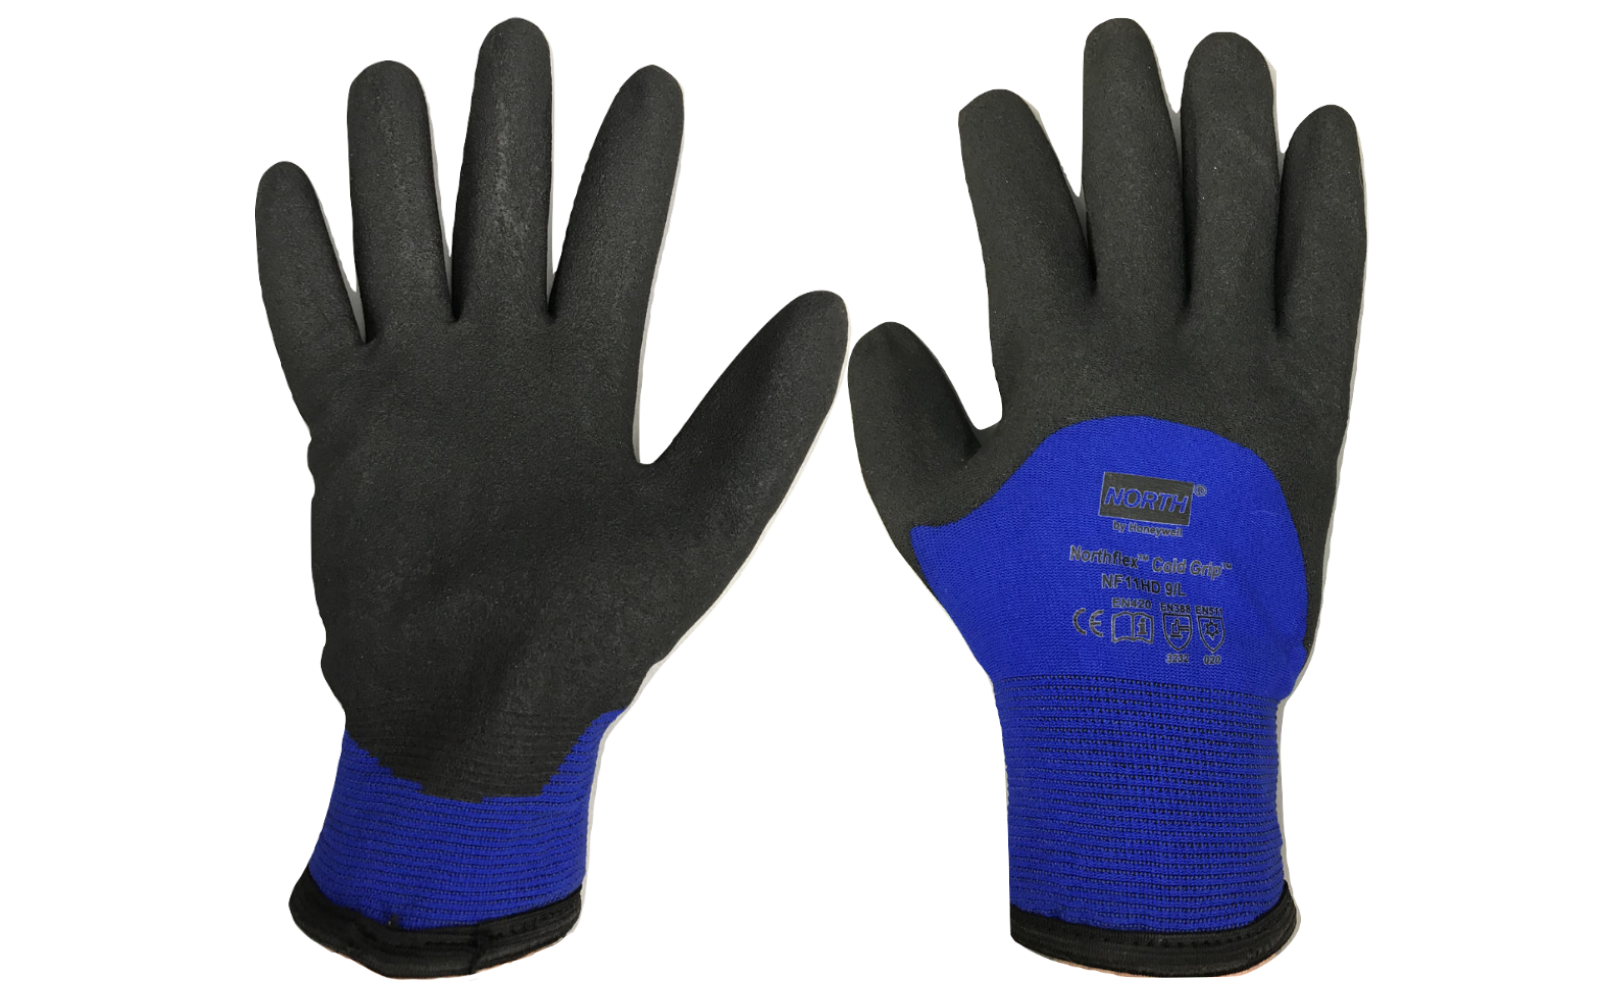 Honeywell Northflex Coated Cold Grip Gloves X Large Size Nylon